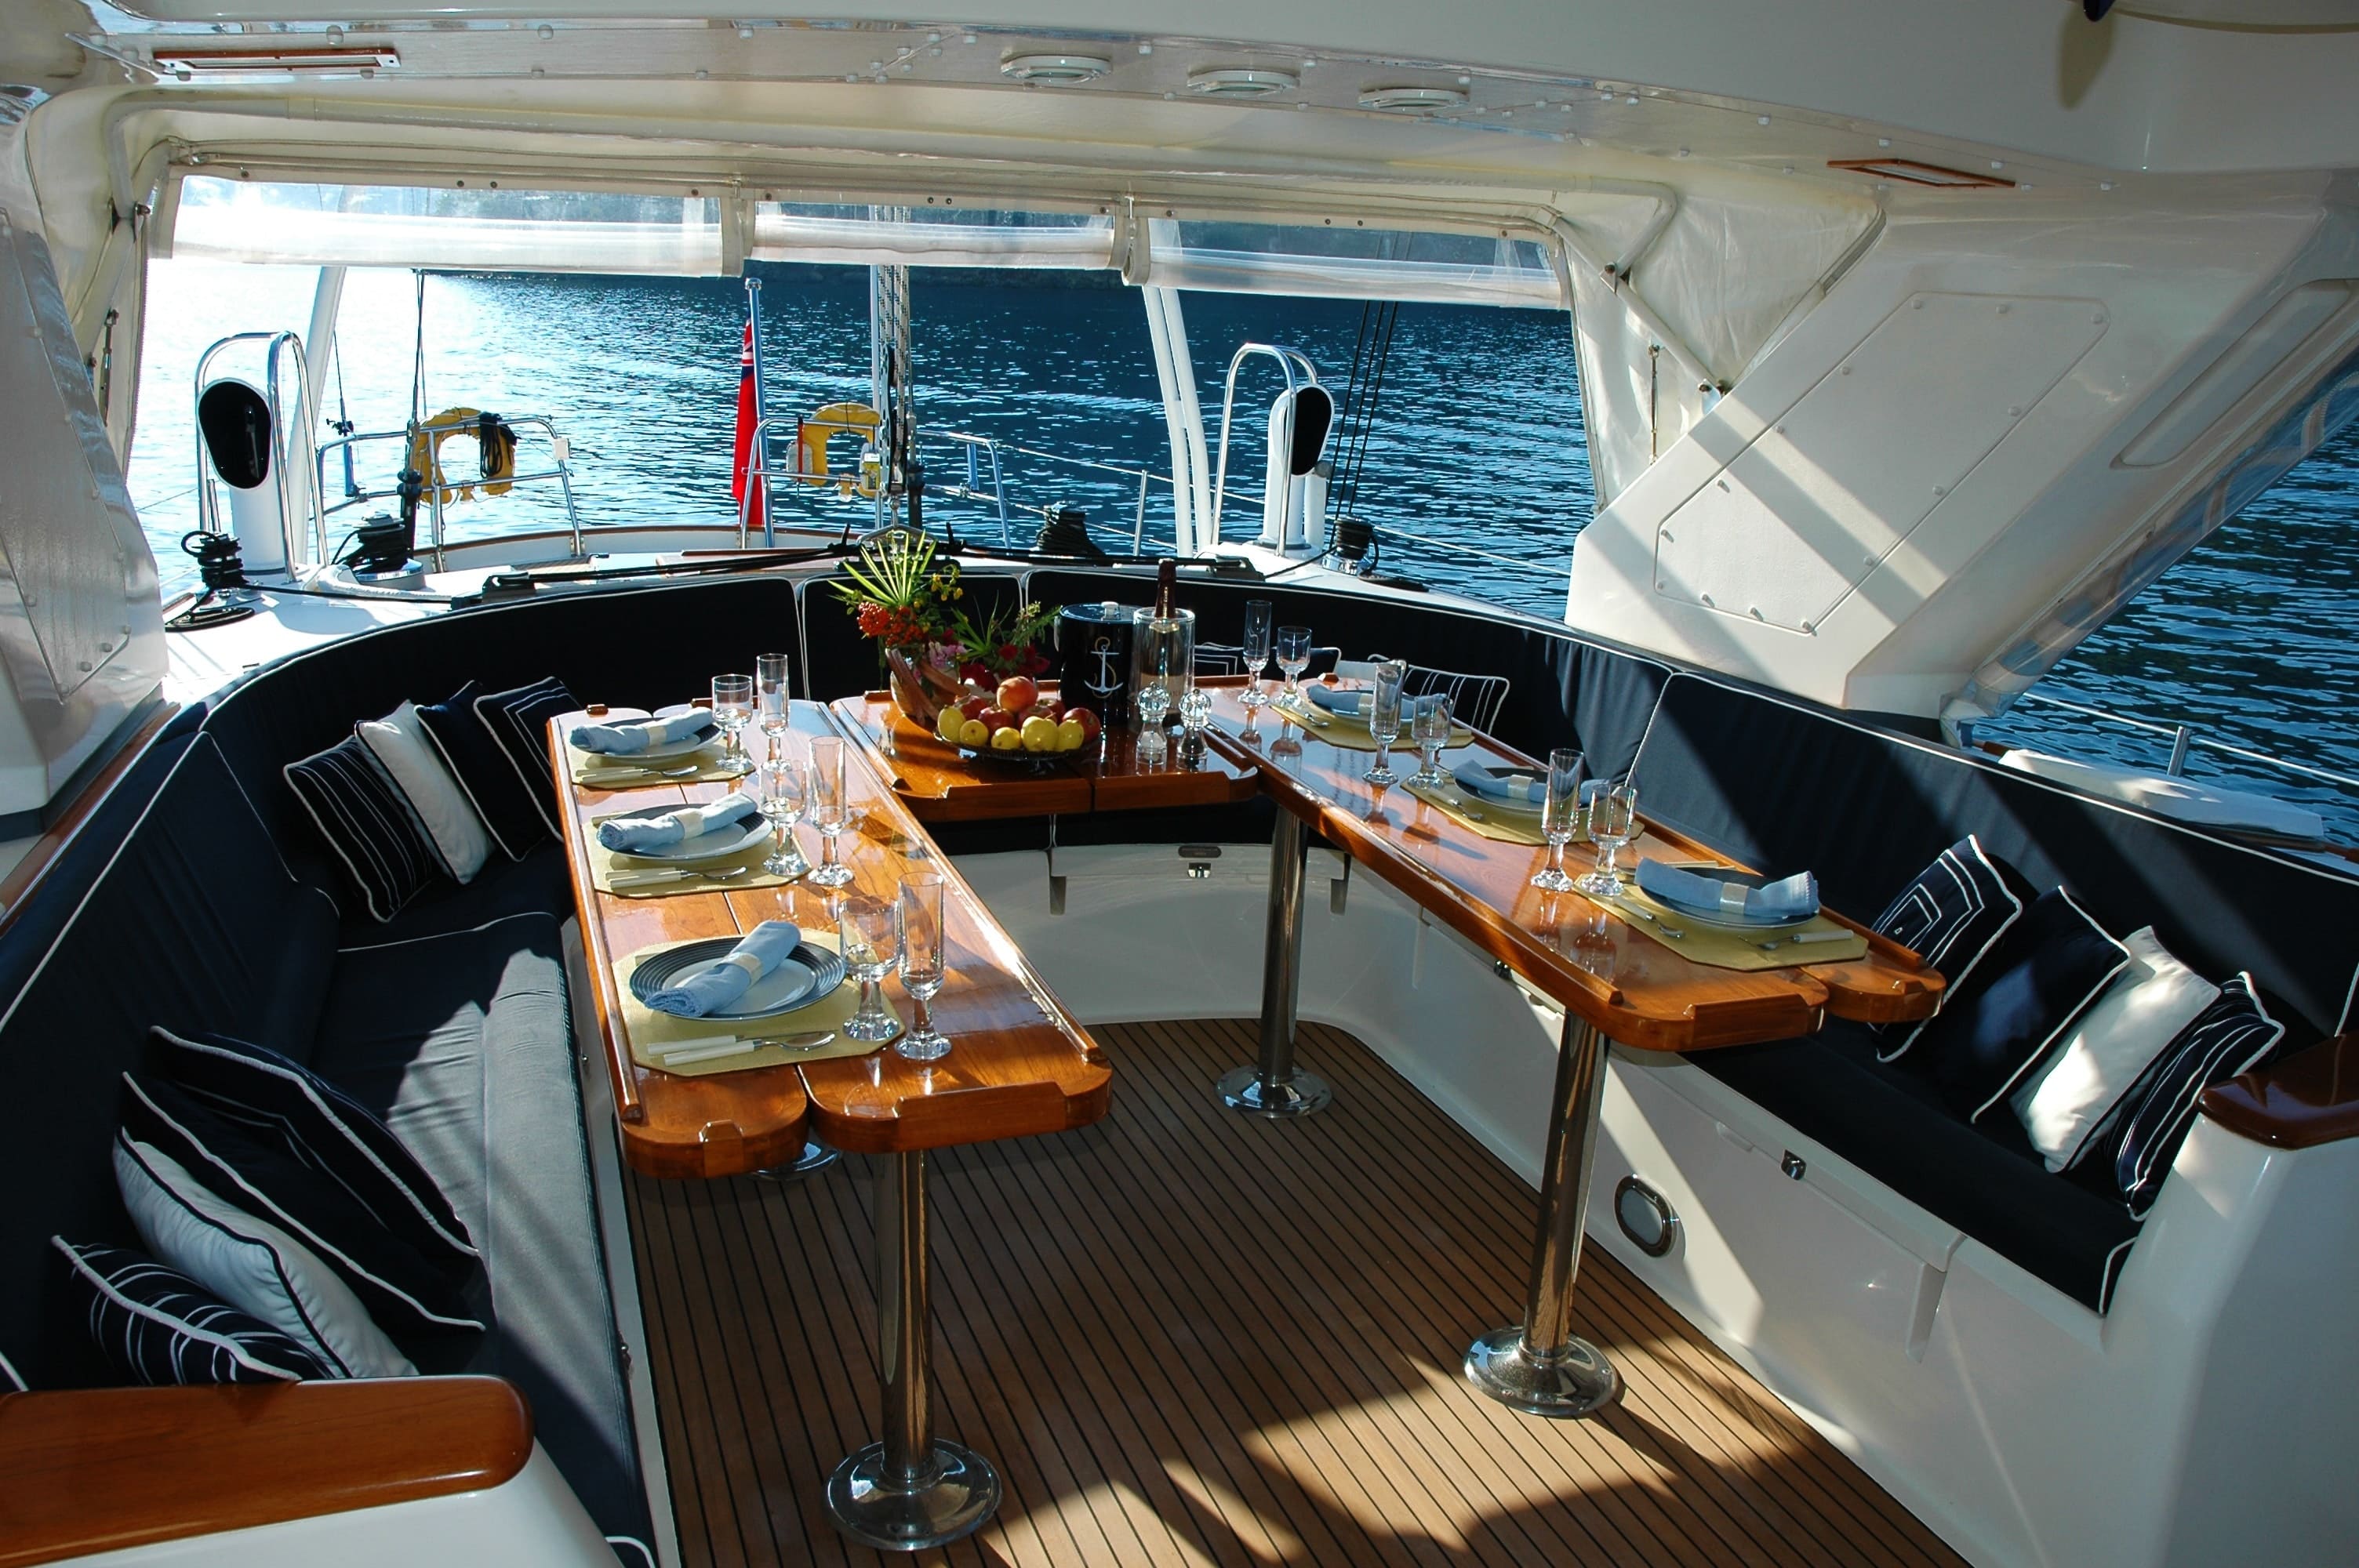  Tulum yachts; breakfast on a yacht